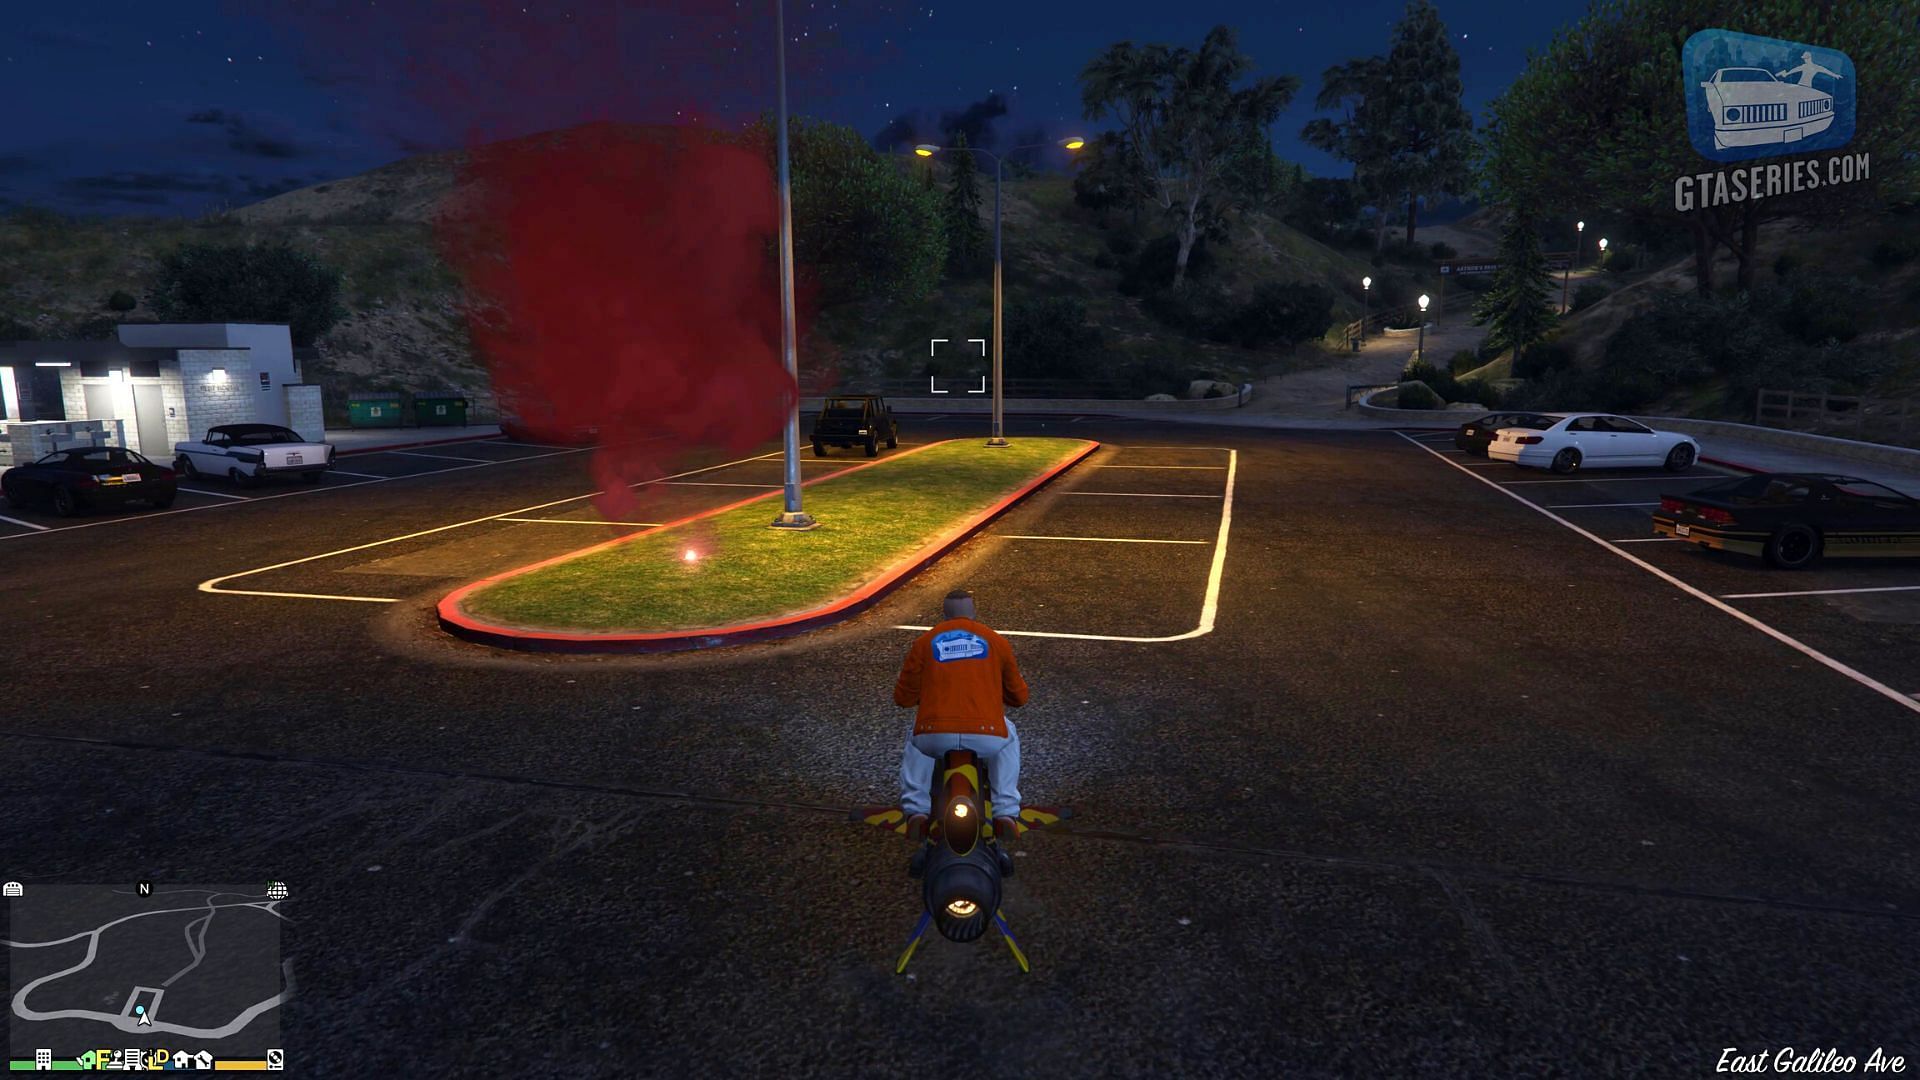 Random Events in Grand Theft Auto Online, GTA Wiki